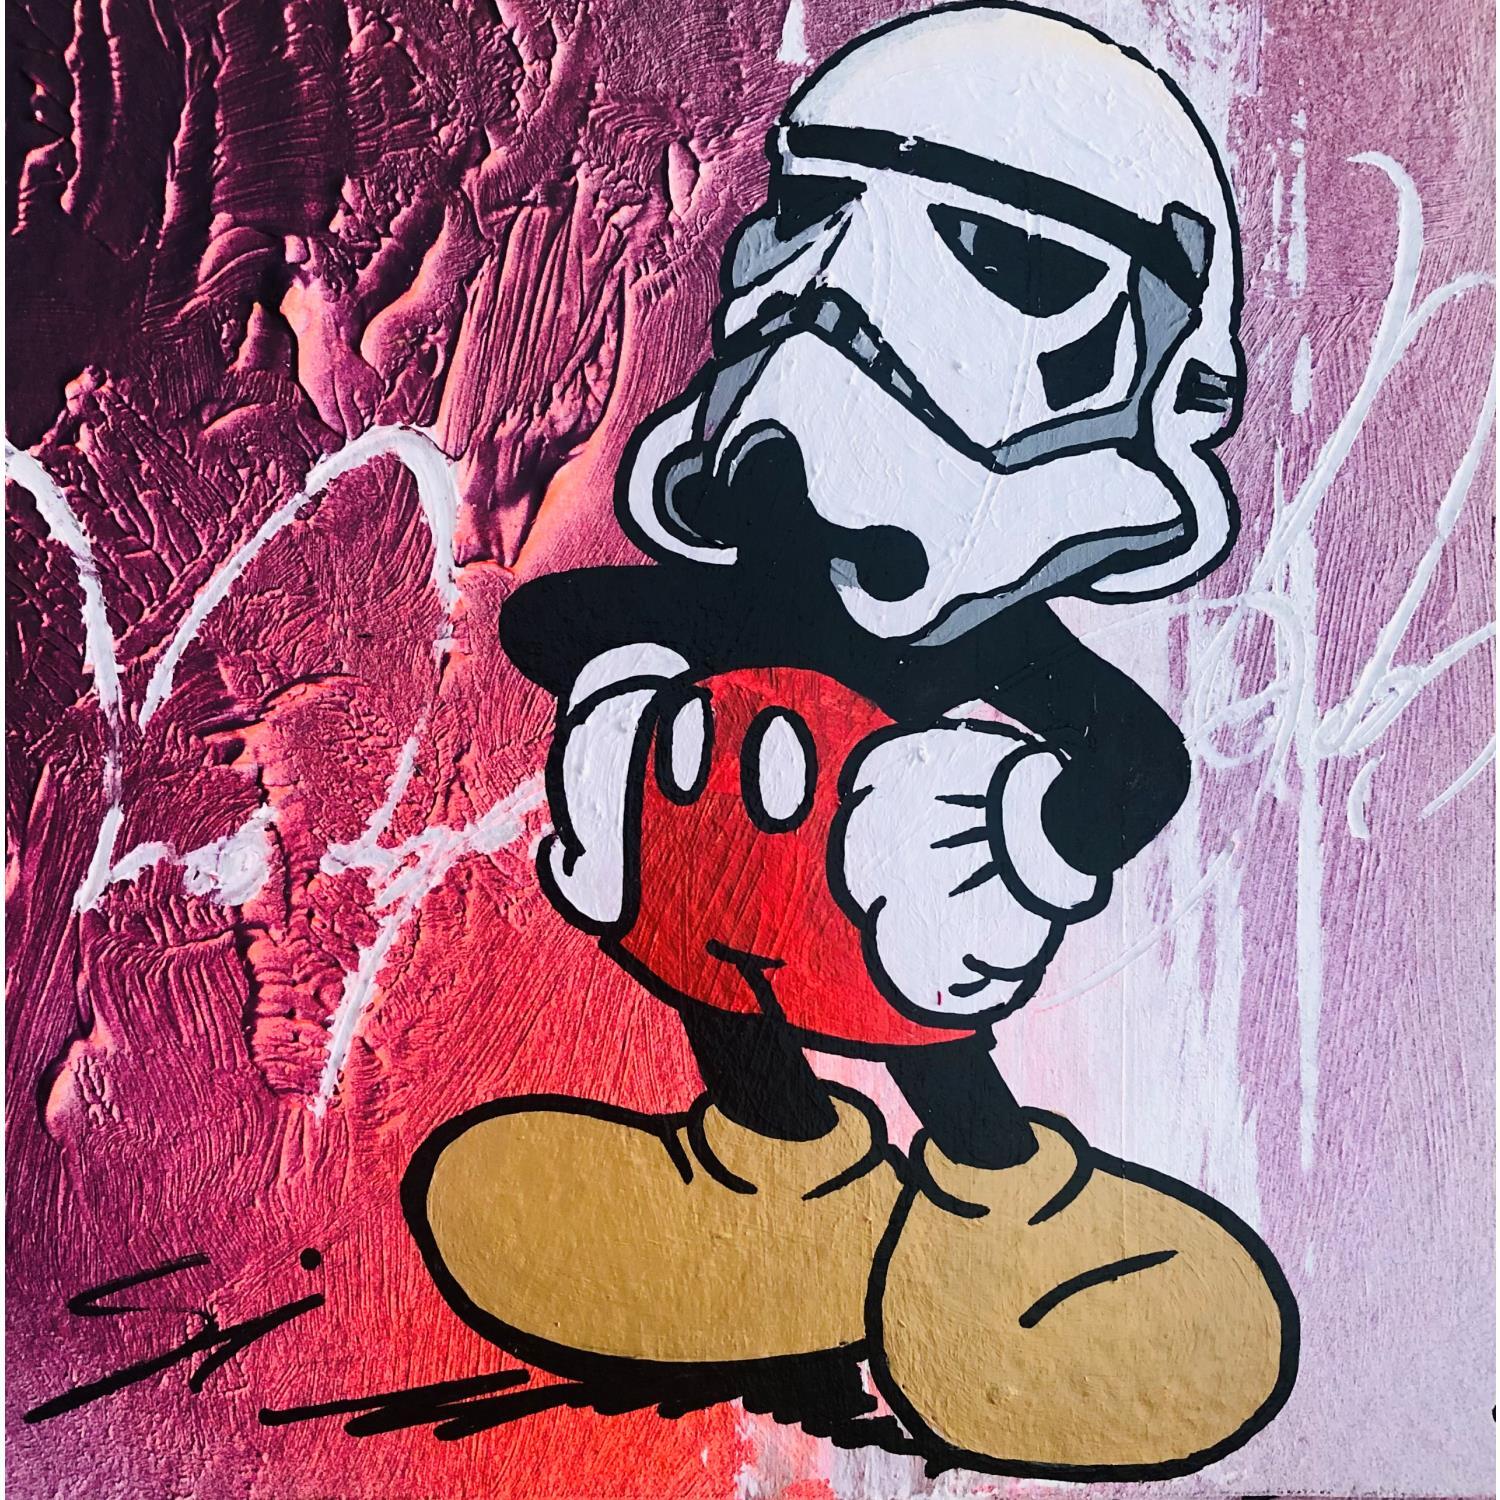 Tableau Street Art Star Wars